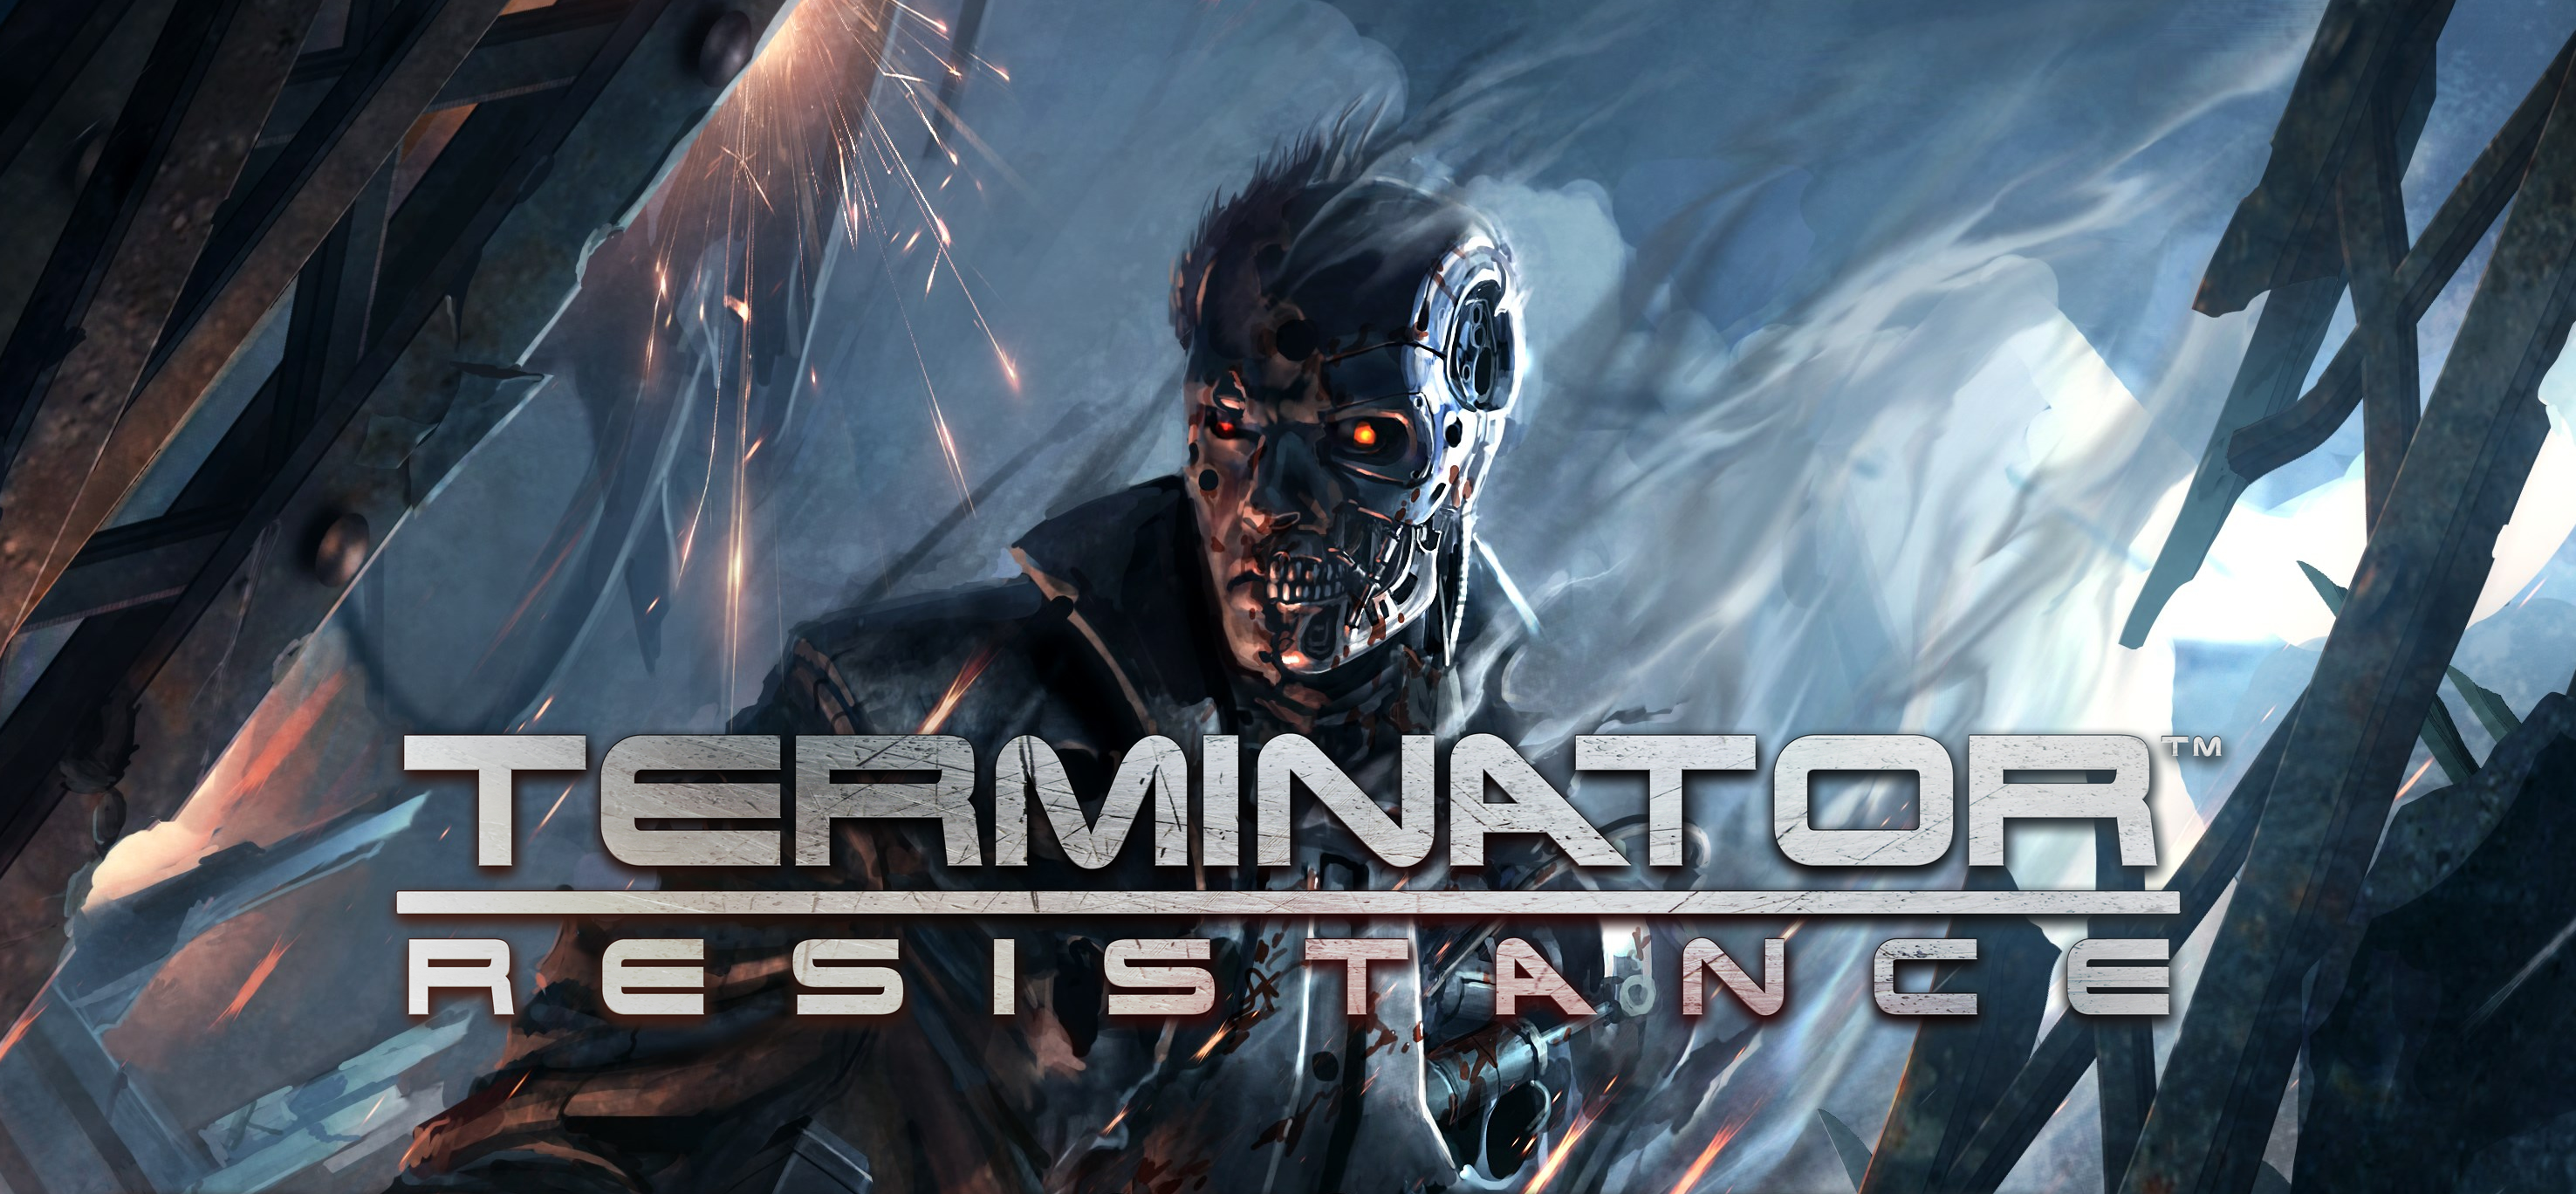 Terminator annihilation. Терминатор сопротивление игра. Терминатор игра на ПК 2019. Terminator игра 2020. Терминатор Resistance ps4 обложка.